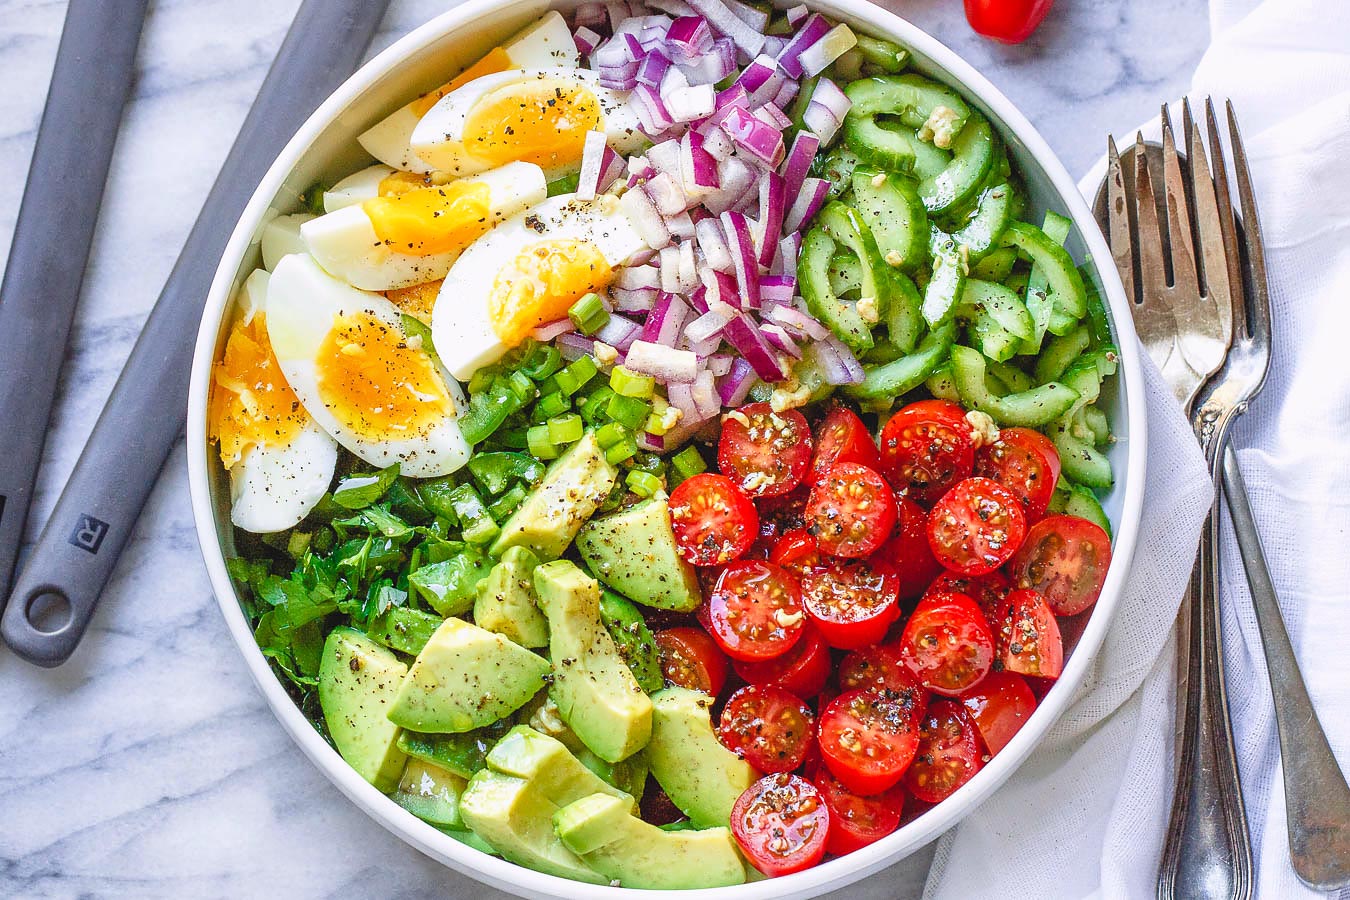 https://www.eatwell101.com/wp-content/uploads/2019/04/avocado-and-eggs-salad-recipe.jpg